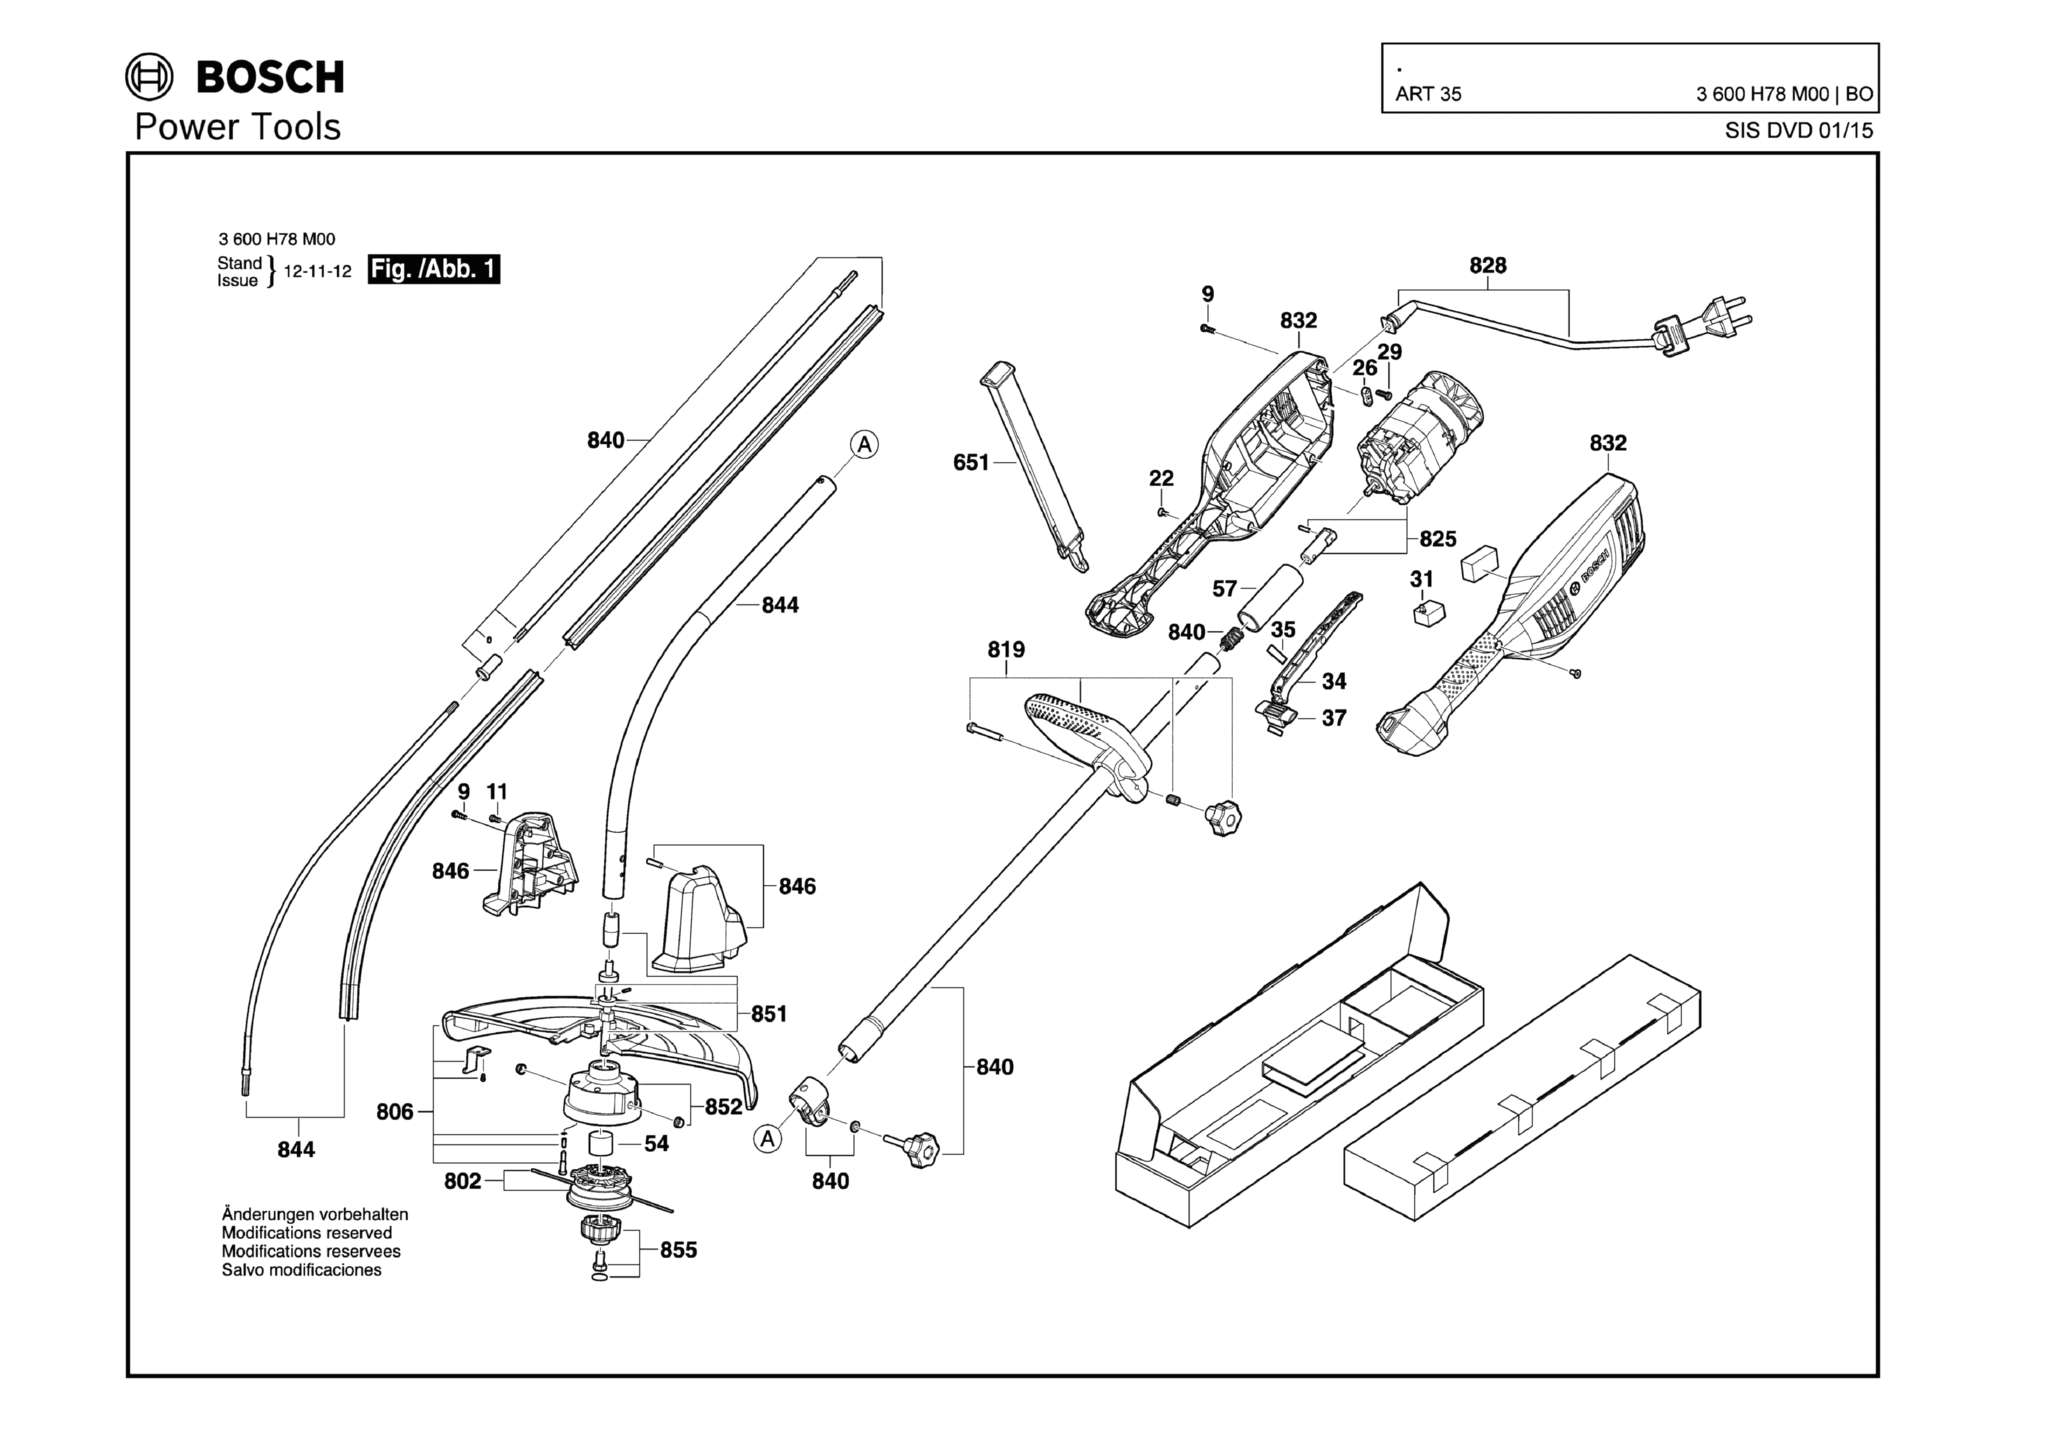 Запчасти, схема и деталировка Bosch ART 35 (ТИП 3600H78M00)